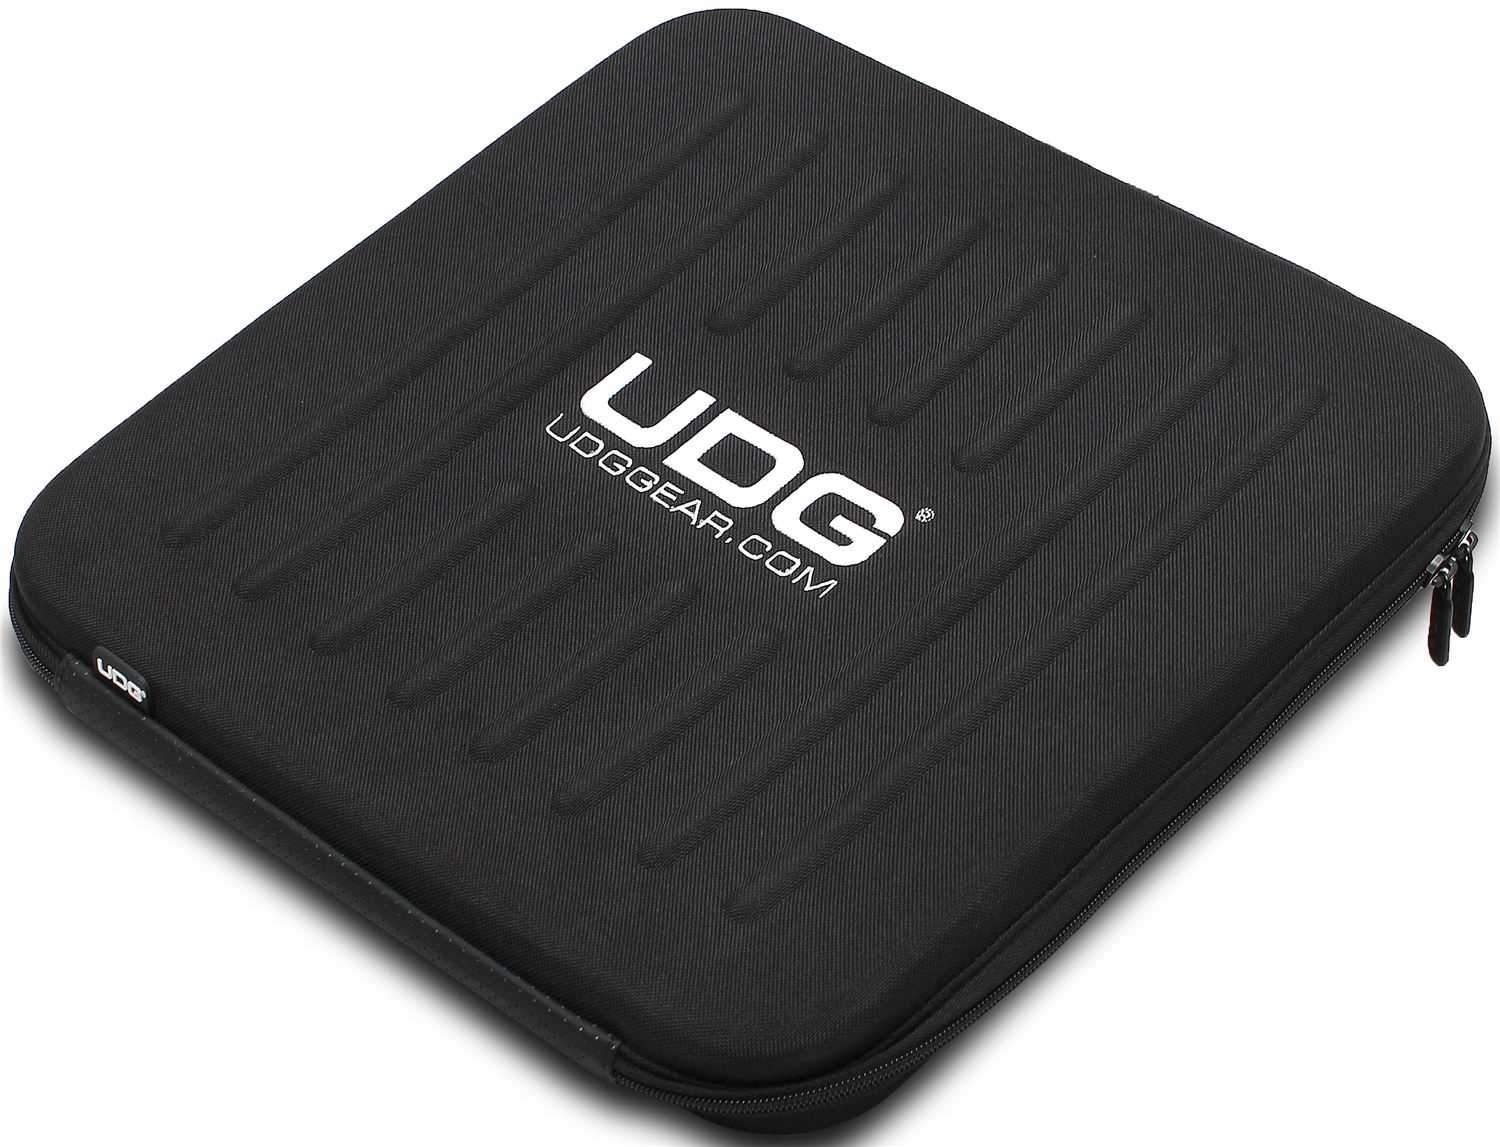 UDG U8076BL Creator Professional Record LP Sleeve - PSSL ProSound and Stage Lighting